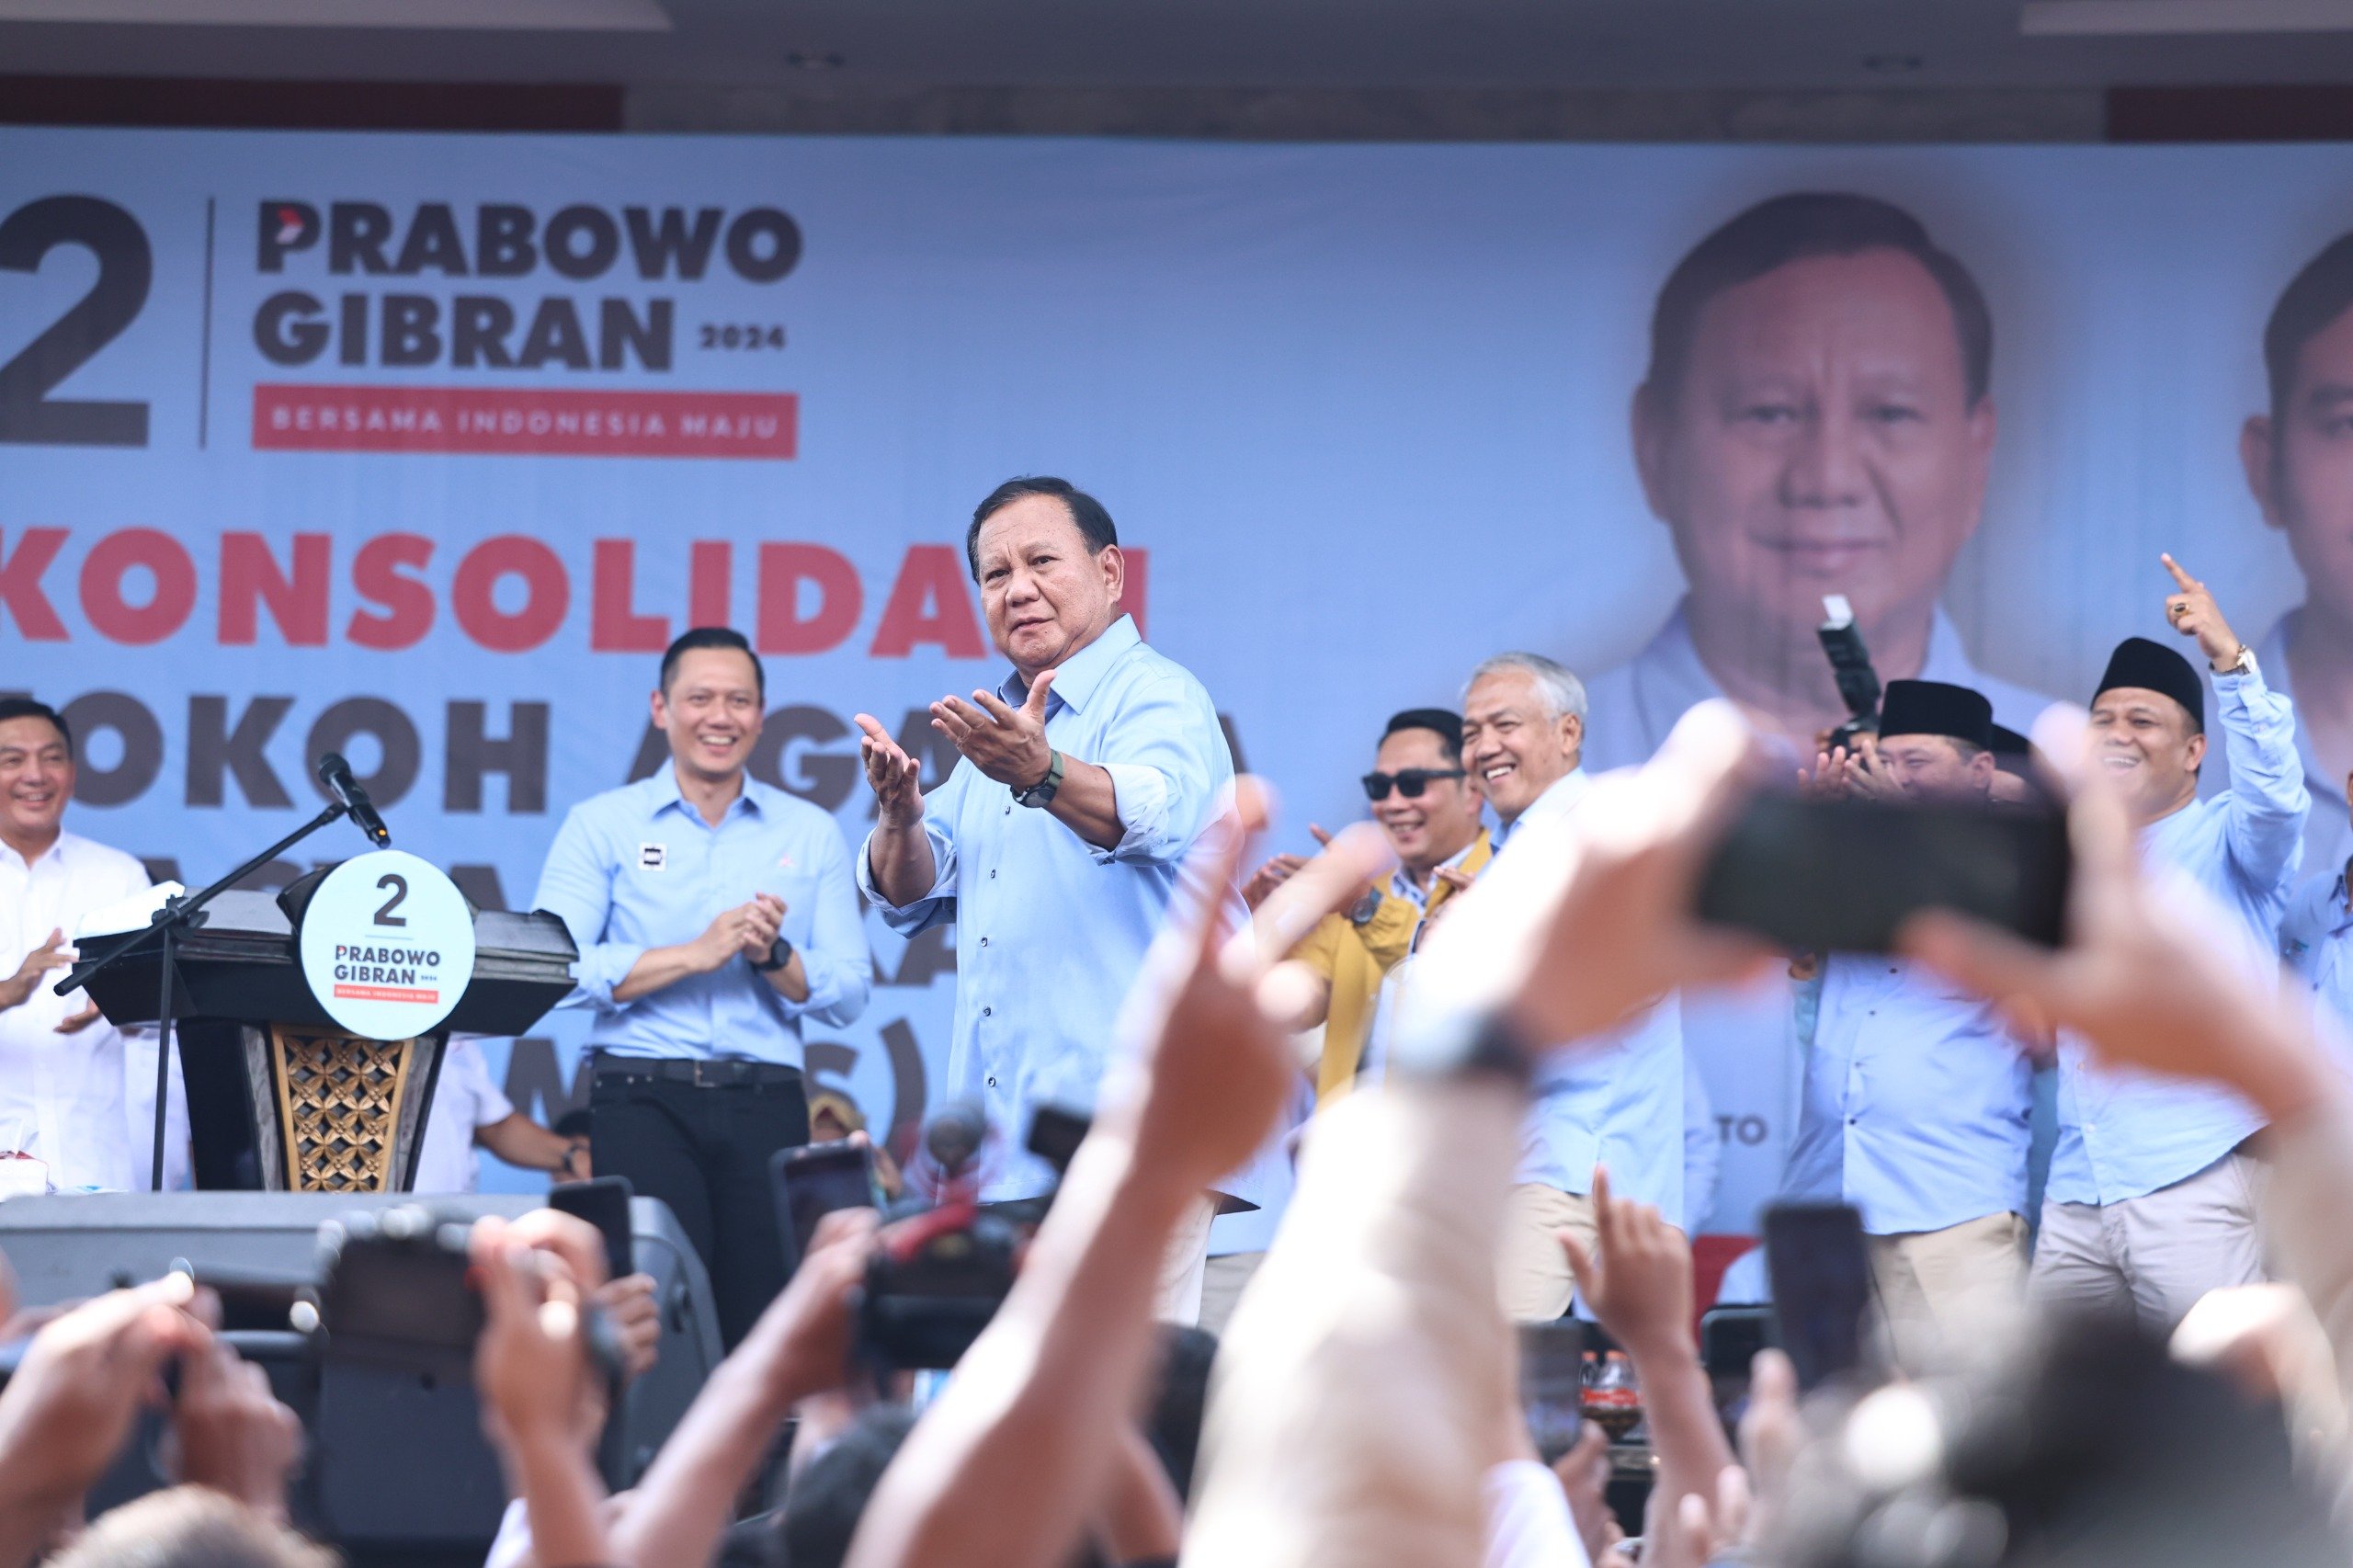 Prabowo disambut para pendukungnya (Sinpo.id/Tim Media)